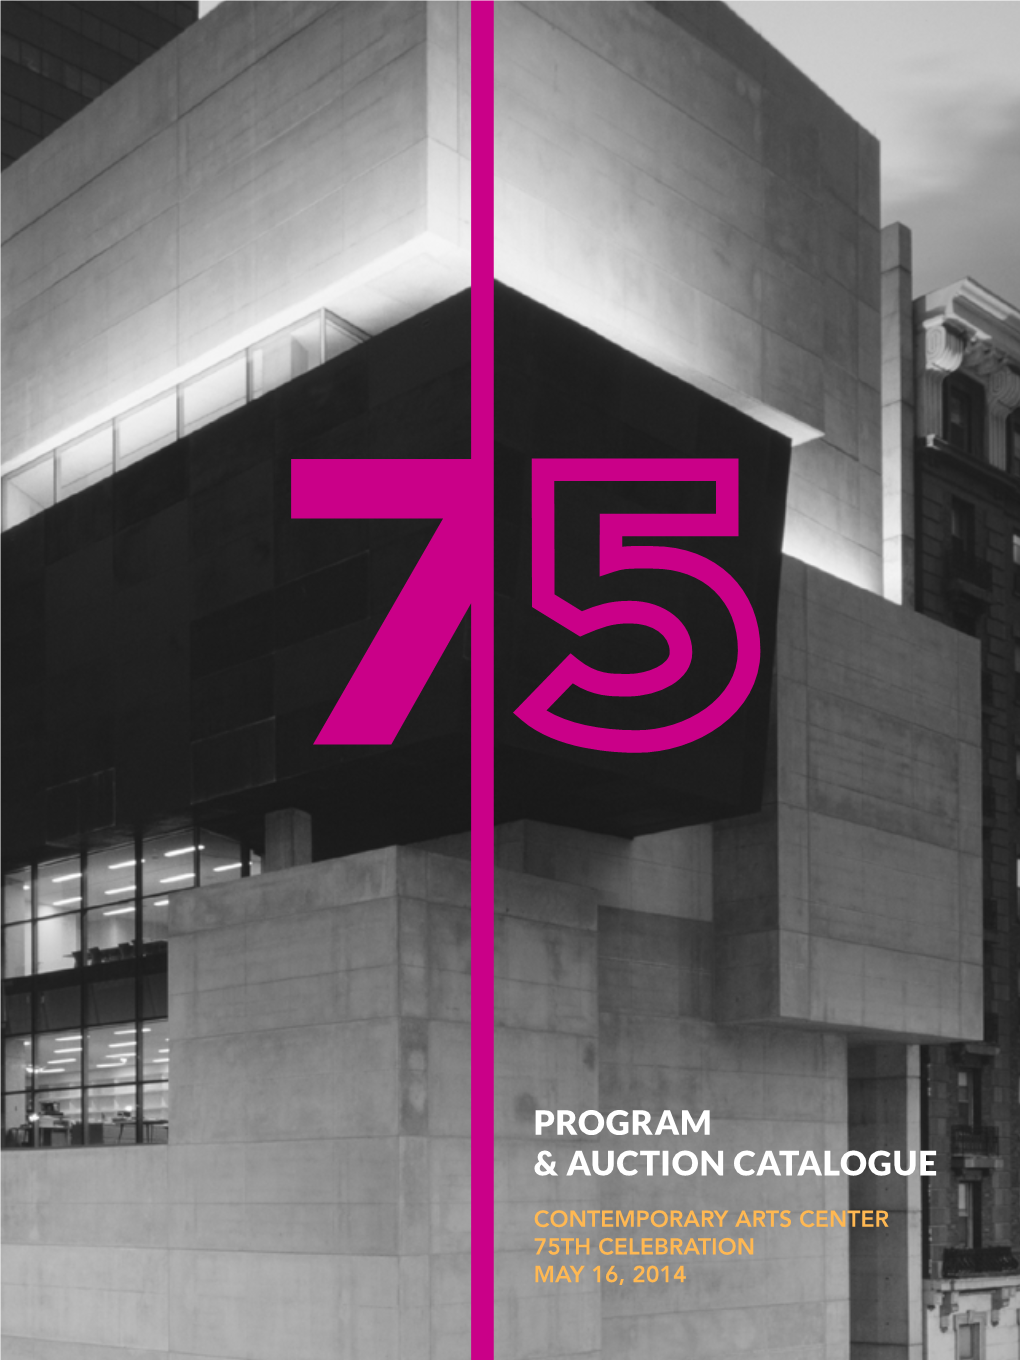 75Th Anniversary Program & Auction Catalogue